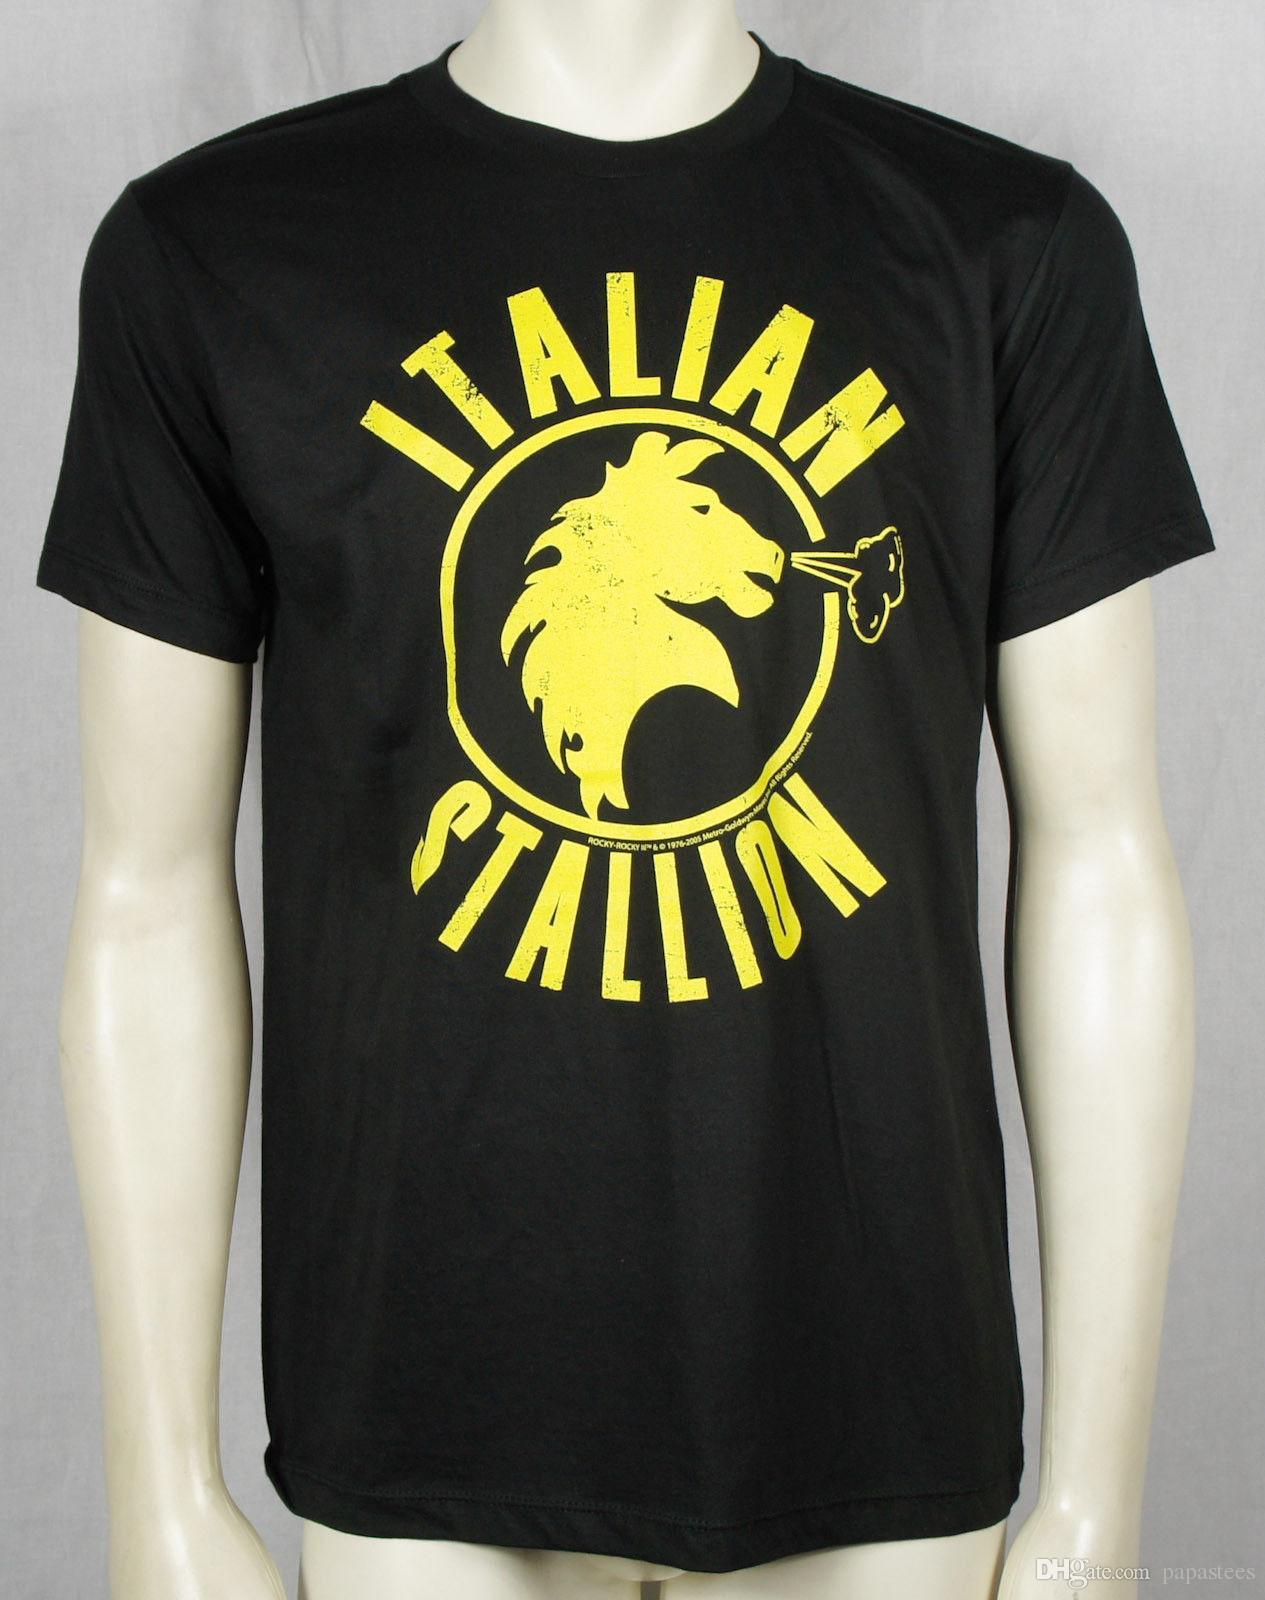 Italian Stallion Logo - Authentic ROCKY BALBOA Movie Italian Stallion Logo Black T Shirt S ...